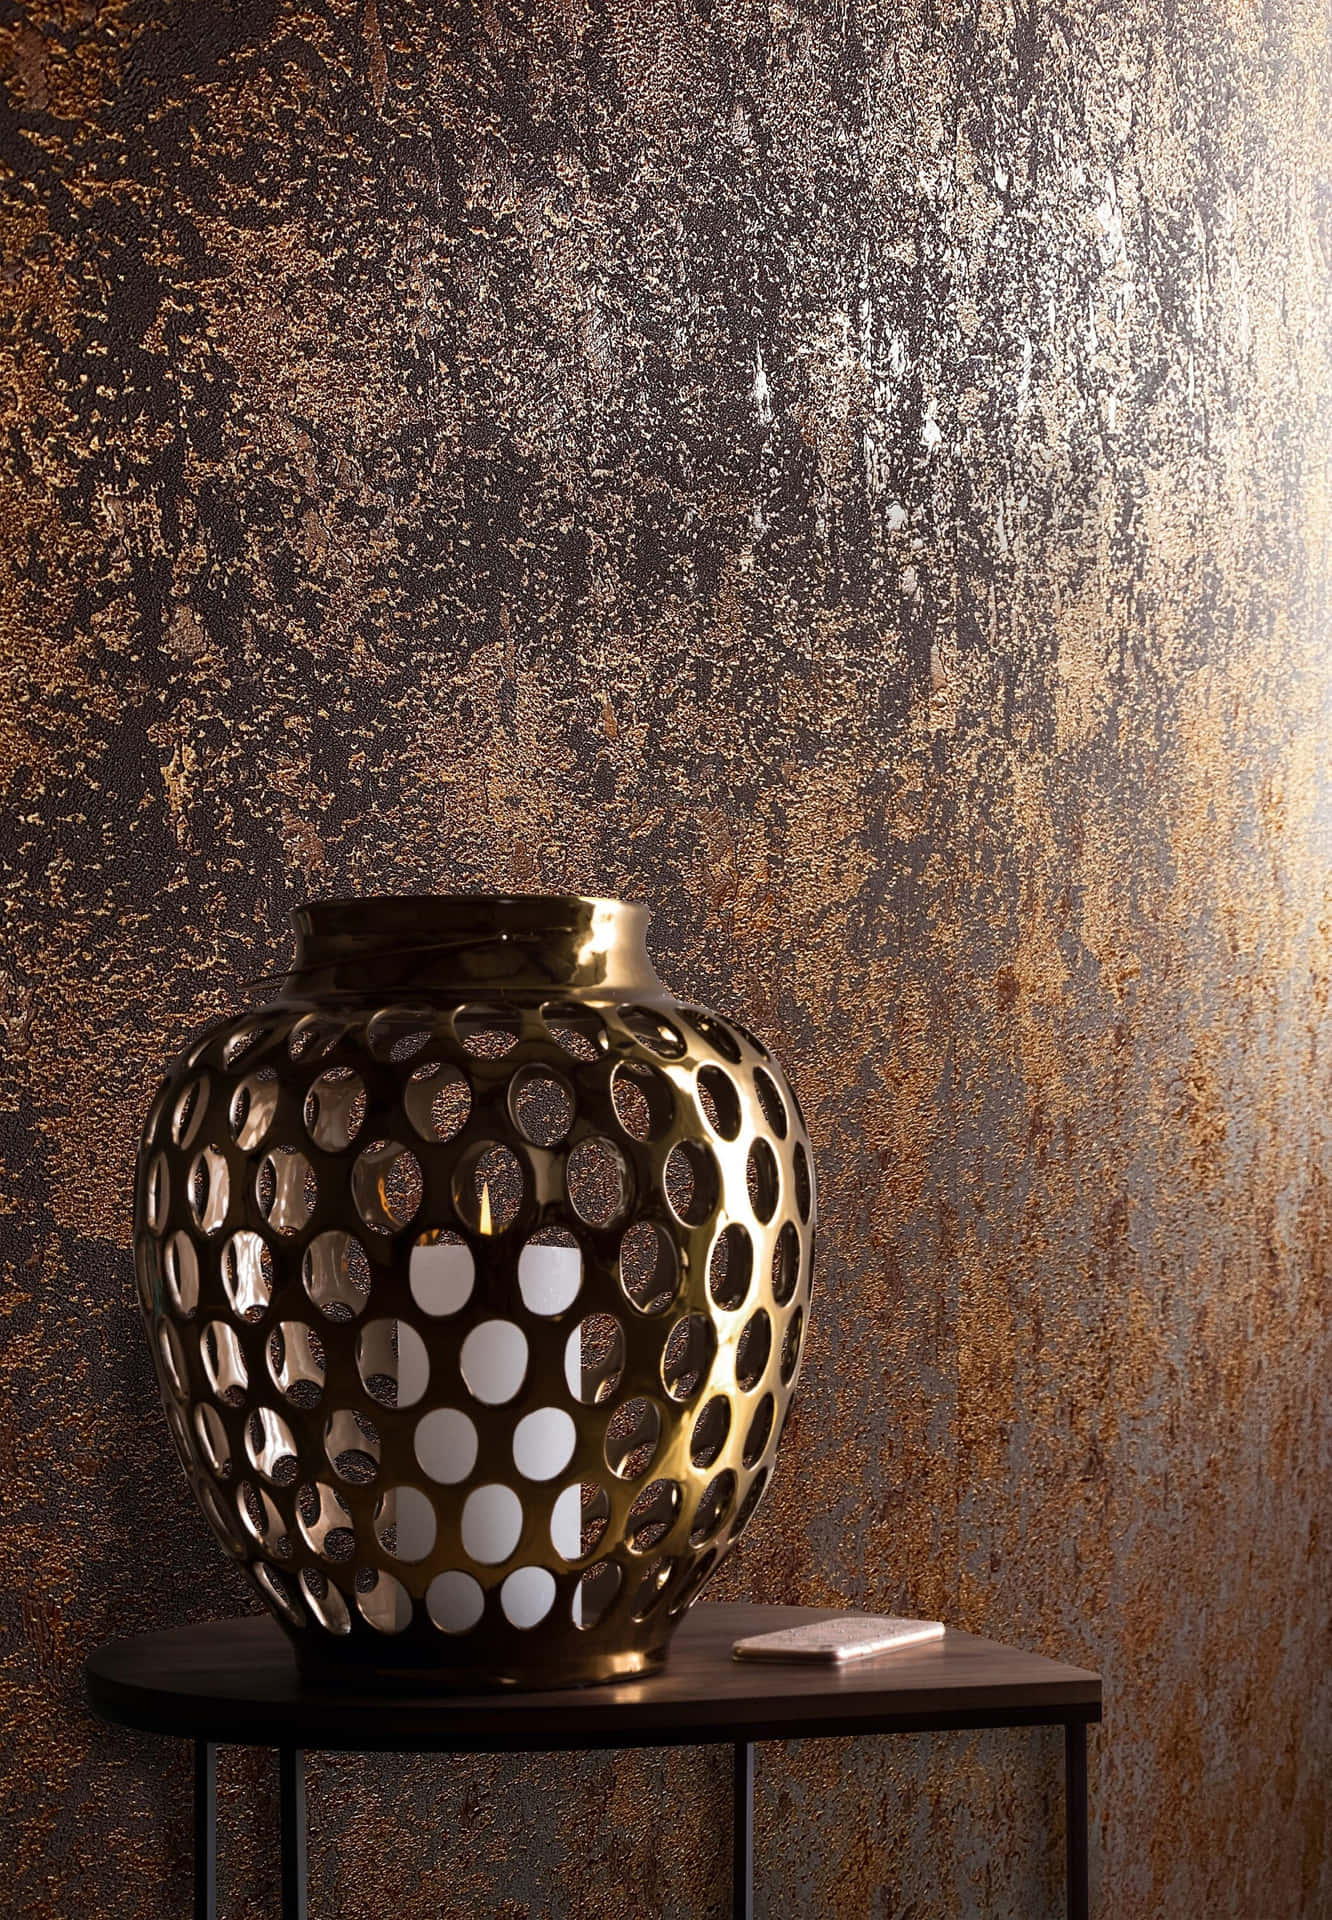 Caption: Intricate Bronze Vase Display Wallpaper